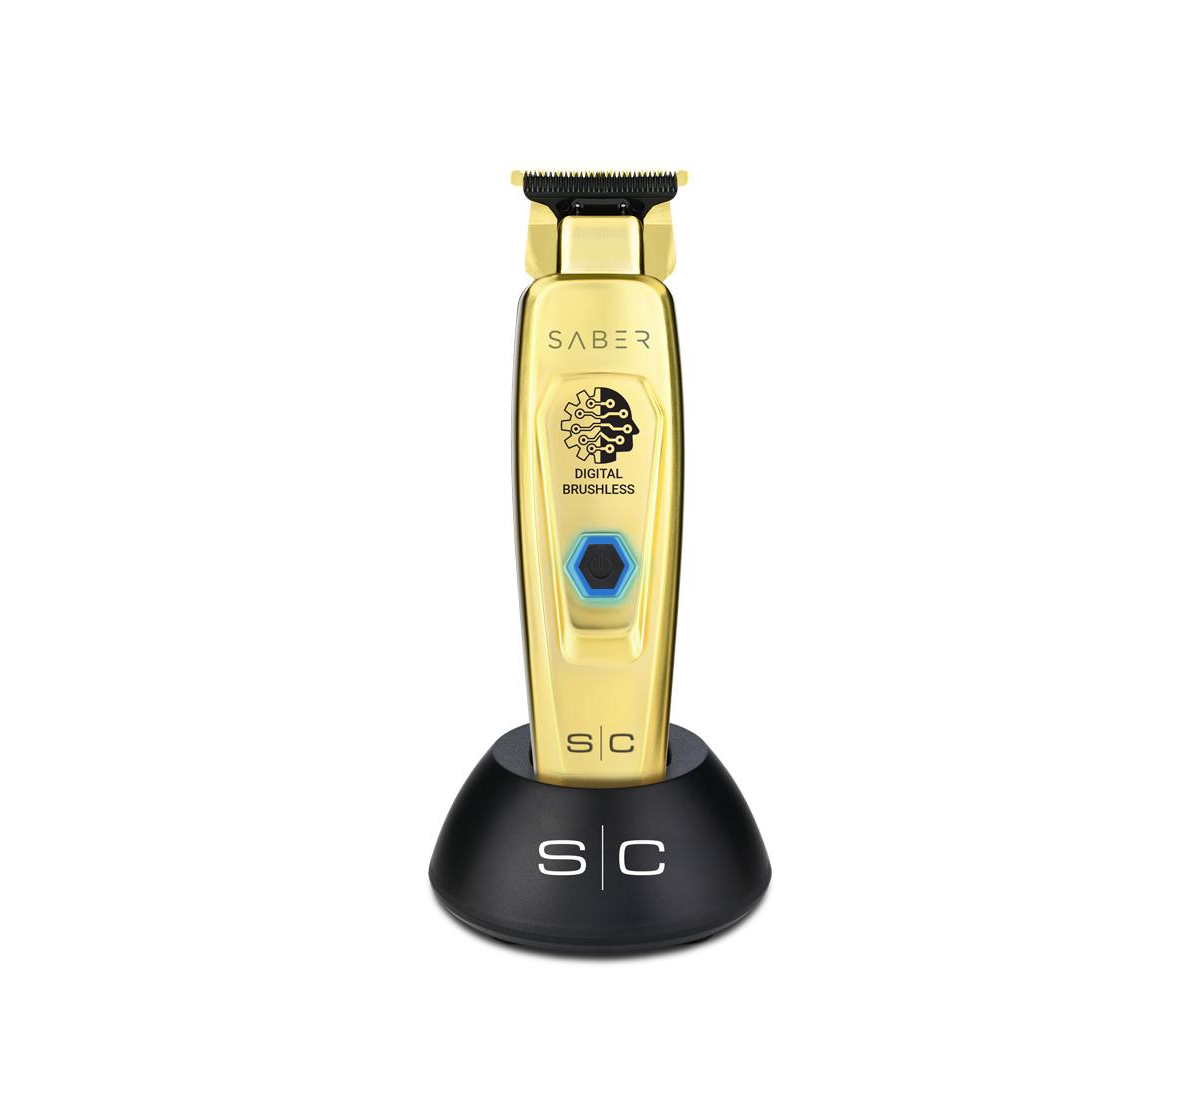 Saber Professional Full Metal Body Digital Brushless Motor Cordless Hair Trimmer - Gold-Tone